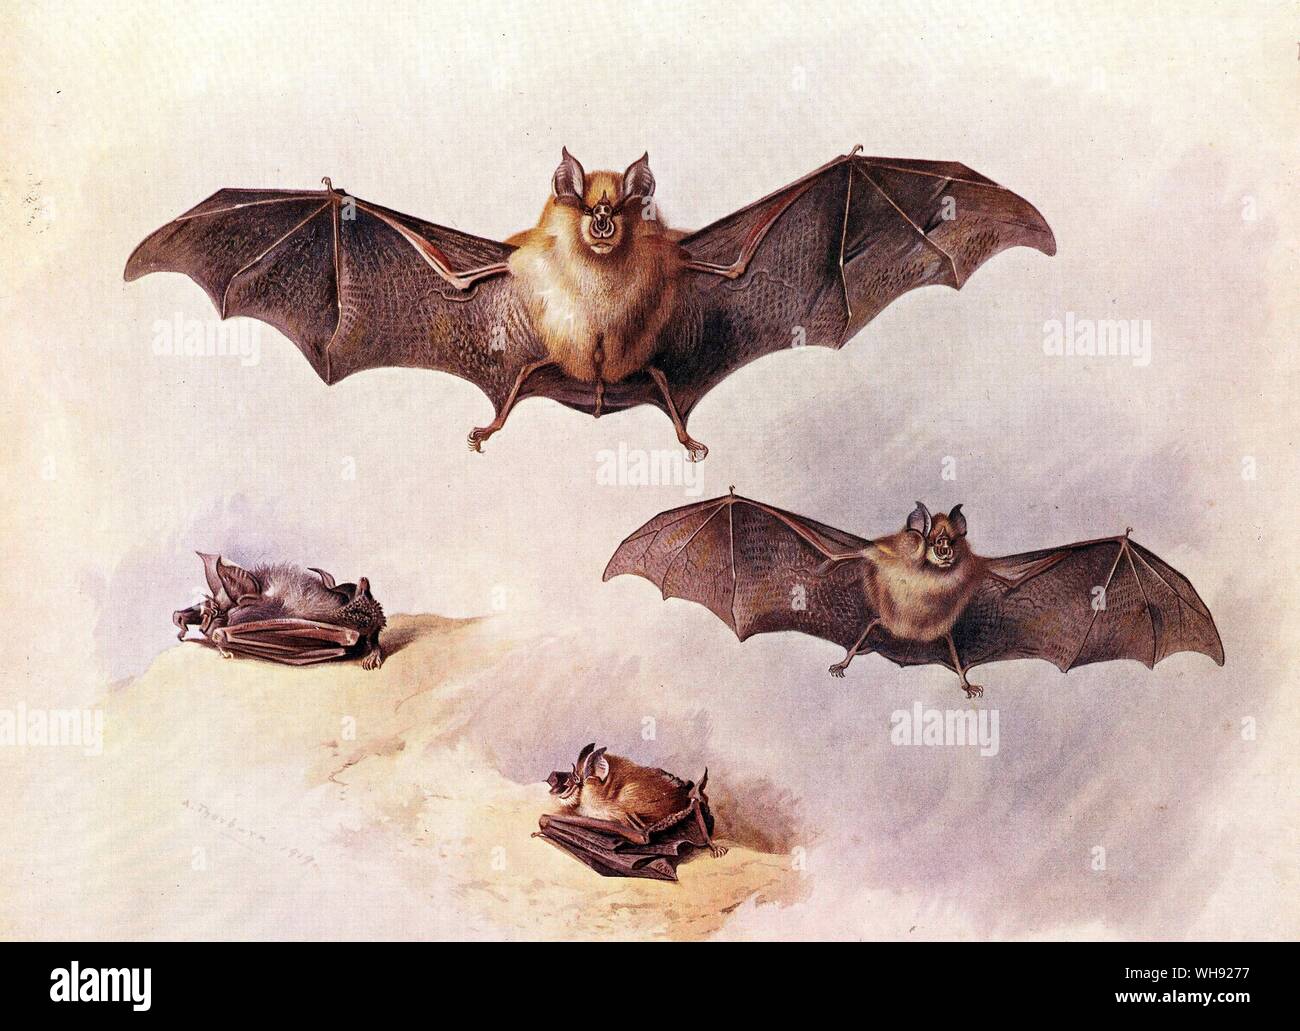 The Greater Horse Shoe Bat, The lesser Horse Shoe Bat. Stock Photo